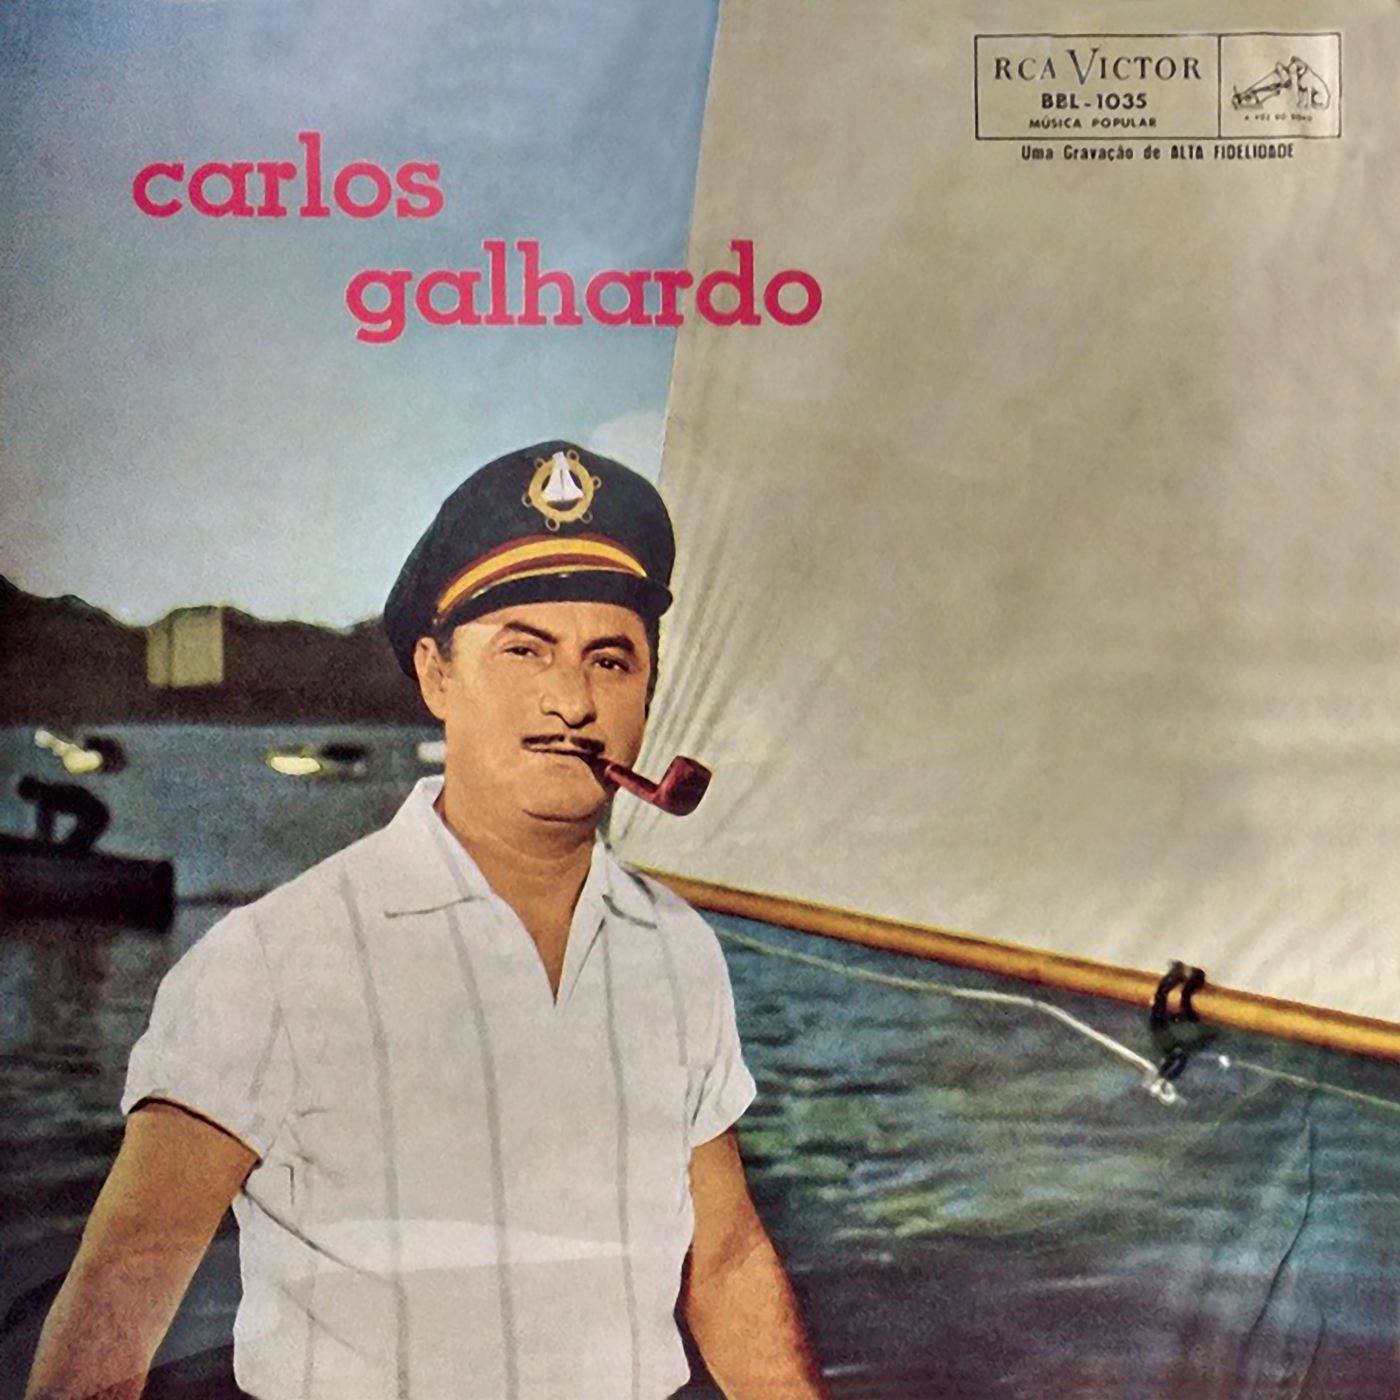 Carlos Galhardo